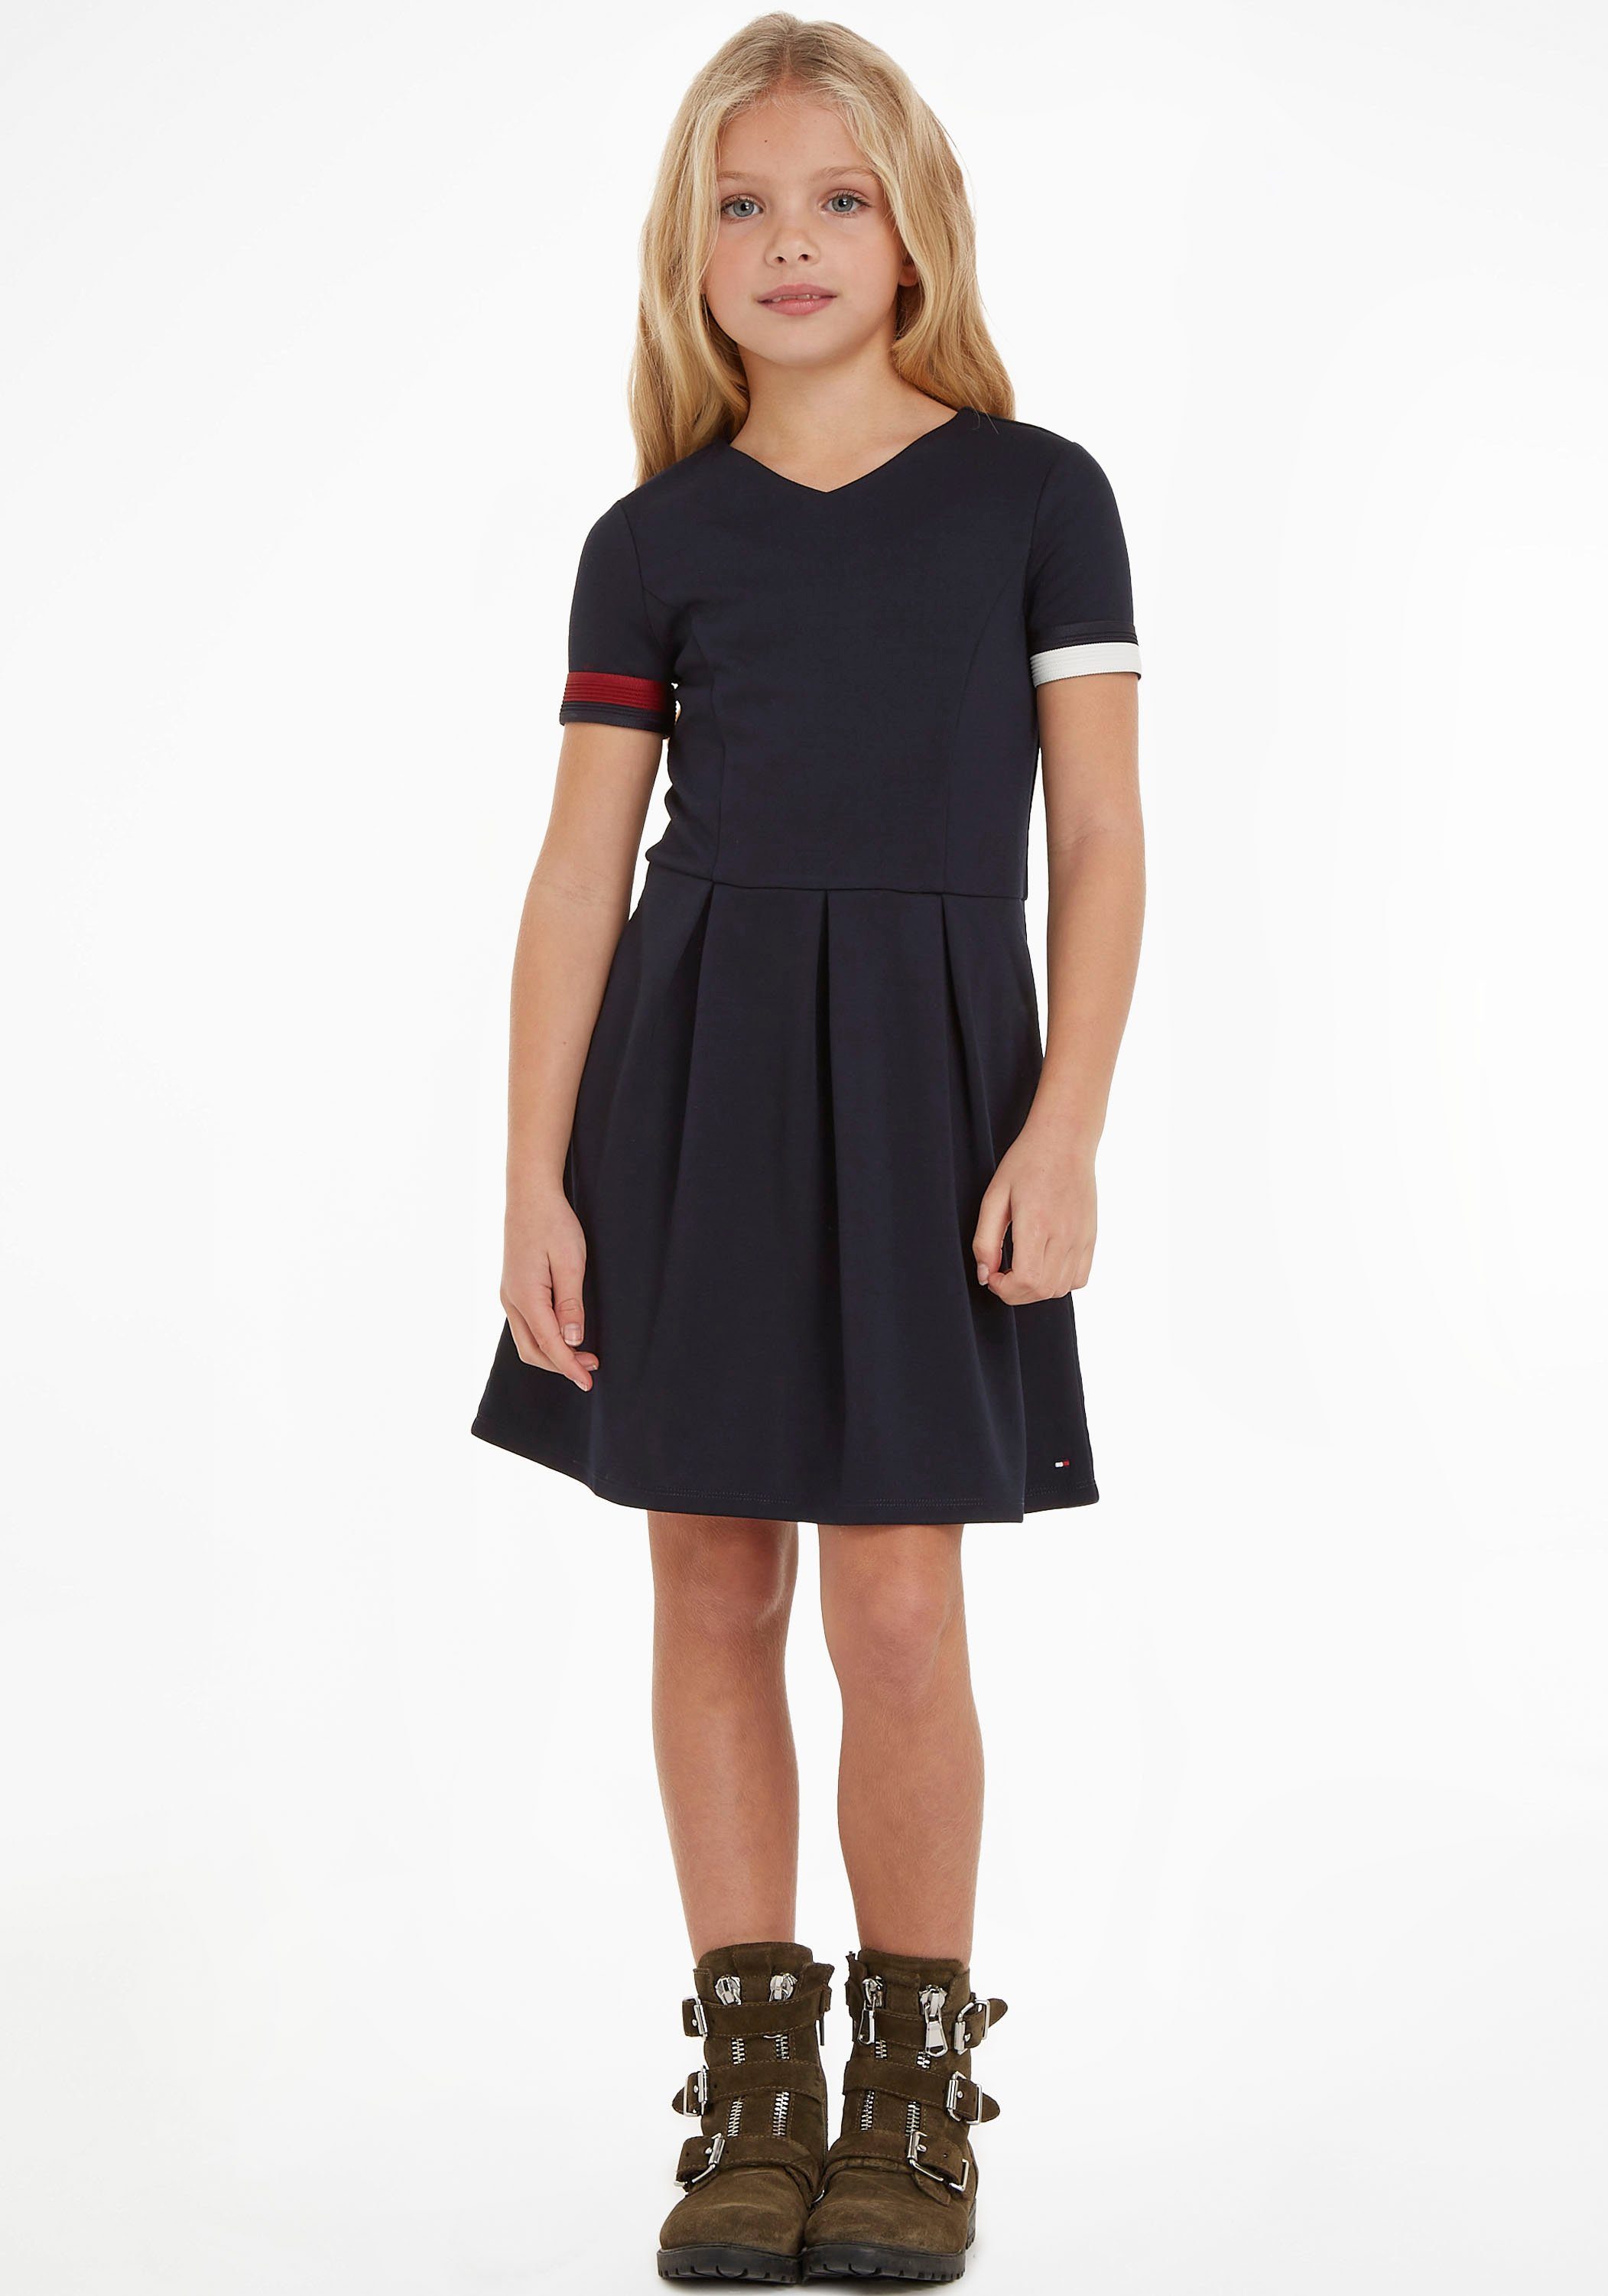 STRIPE GLOBAL PUNTO Junior Hilfiger Blusenkleid Kids Mädchen Tommy MiniMe,für Kinder dunkelblau DRESS